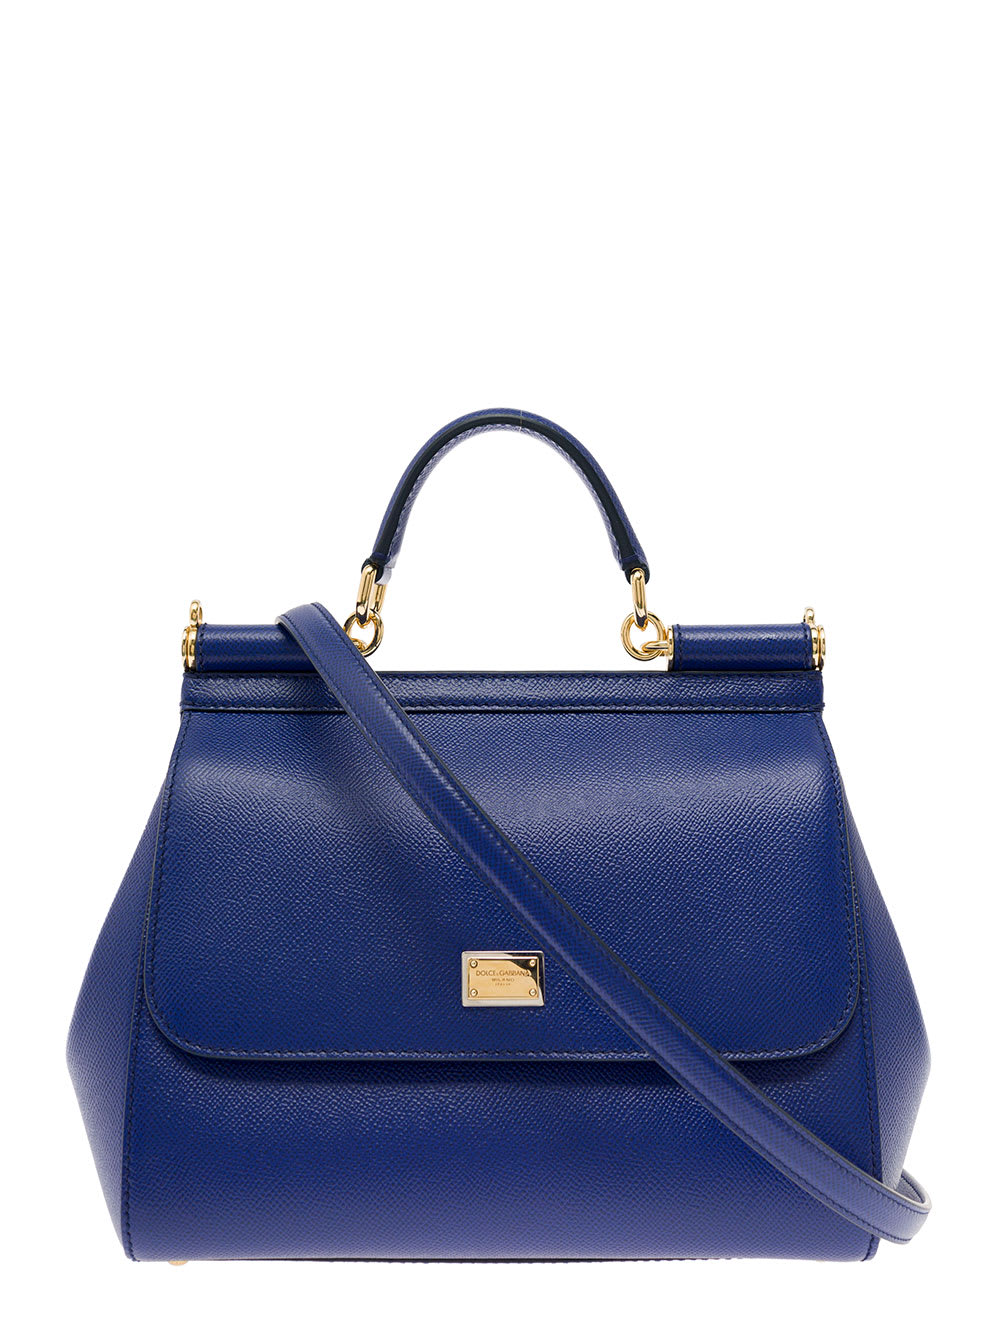 Dolce & Gabbana Womans Sicily Medium Blue Hammered Leather Handbag